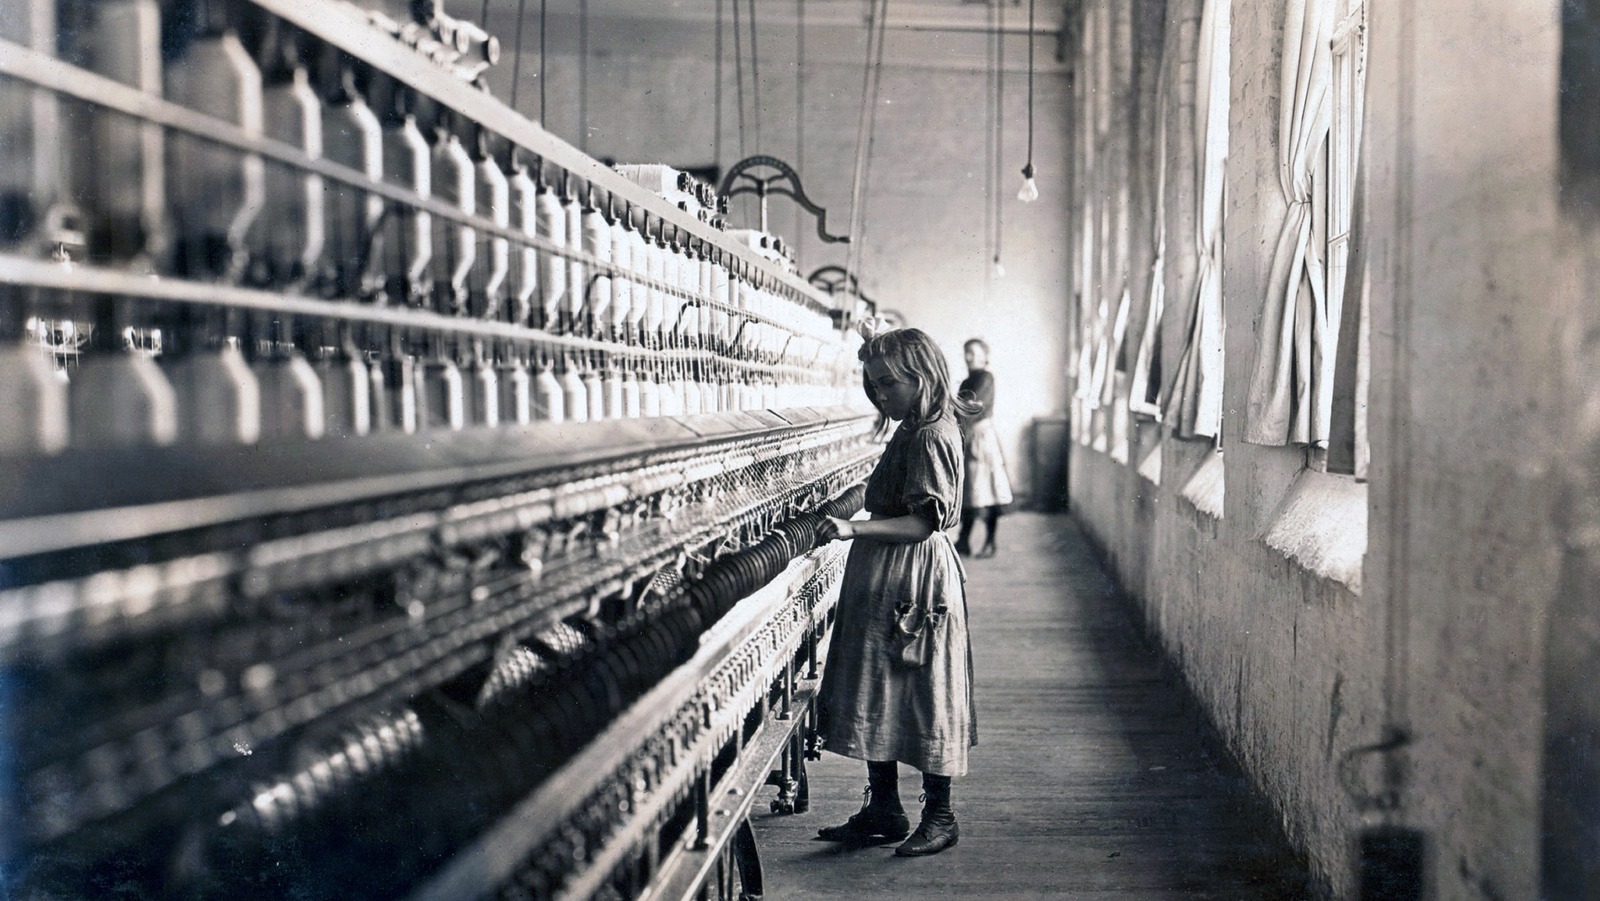 industrial revolution factories working conditions